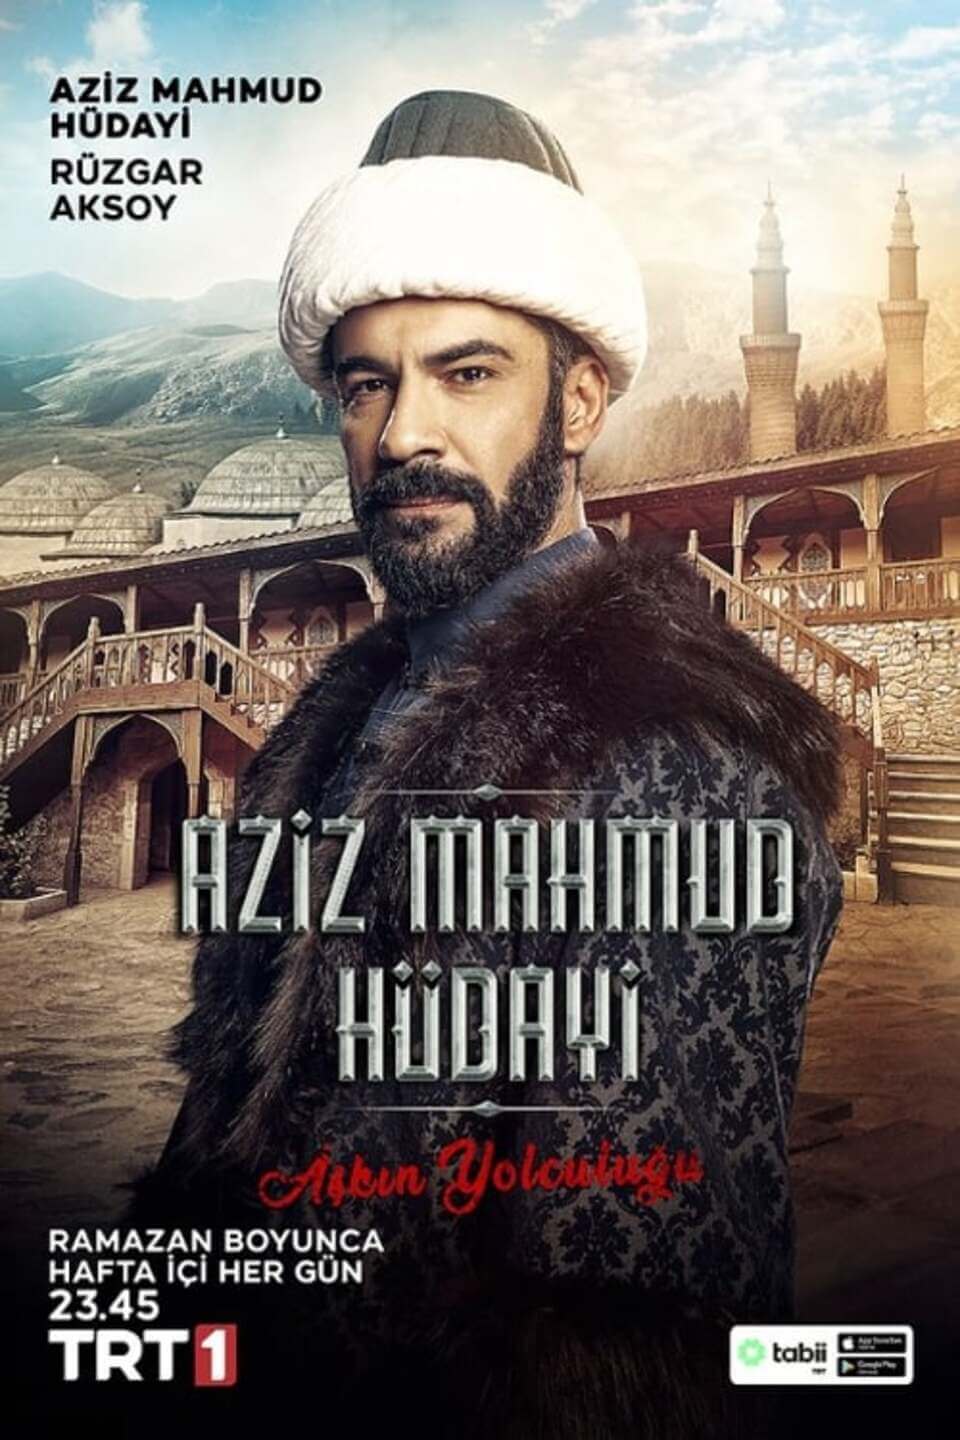 TV ratings for Aziz Mahmud Hüdayi: Aşkın Yolculuğu in Russia. TRT 1 TV series